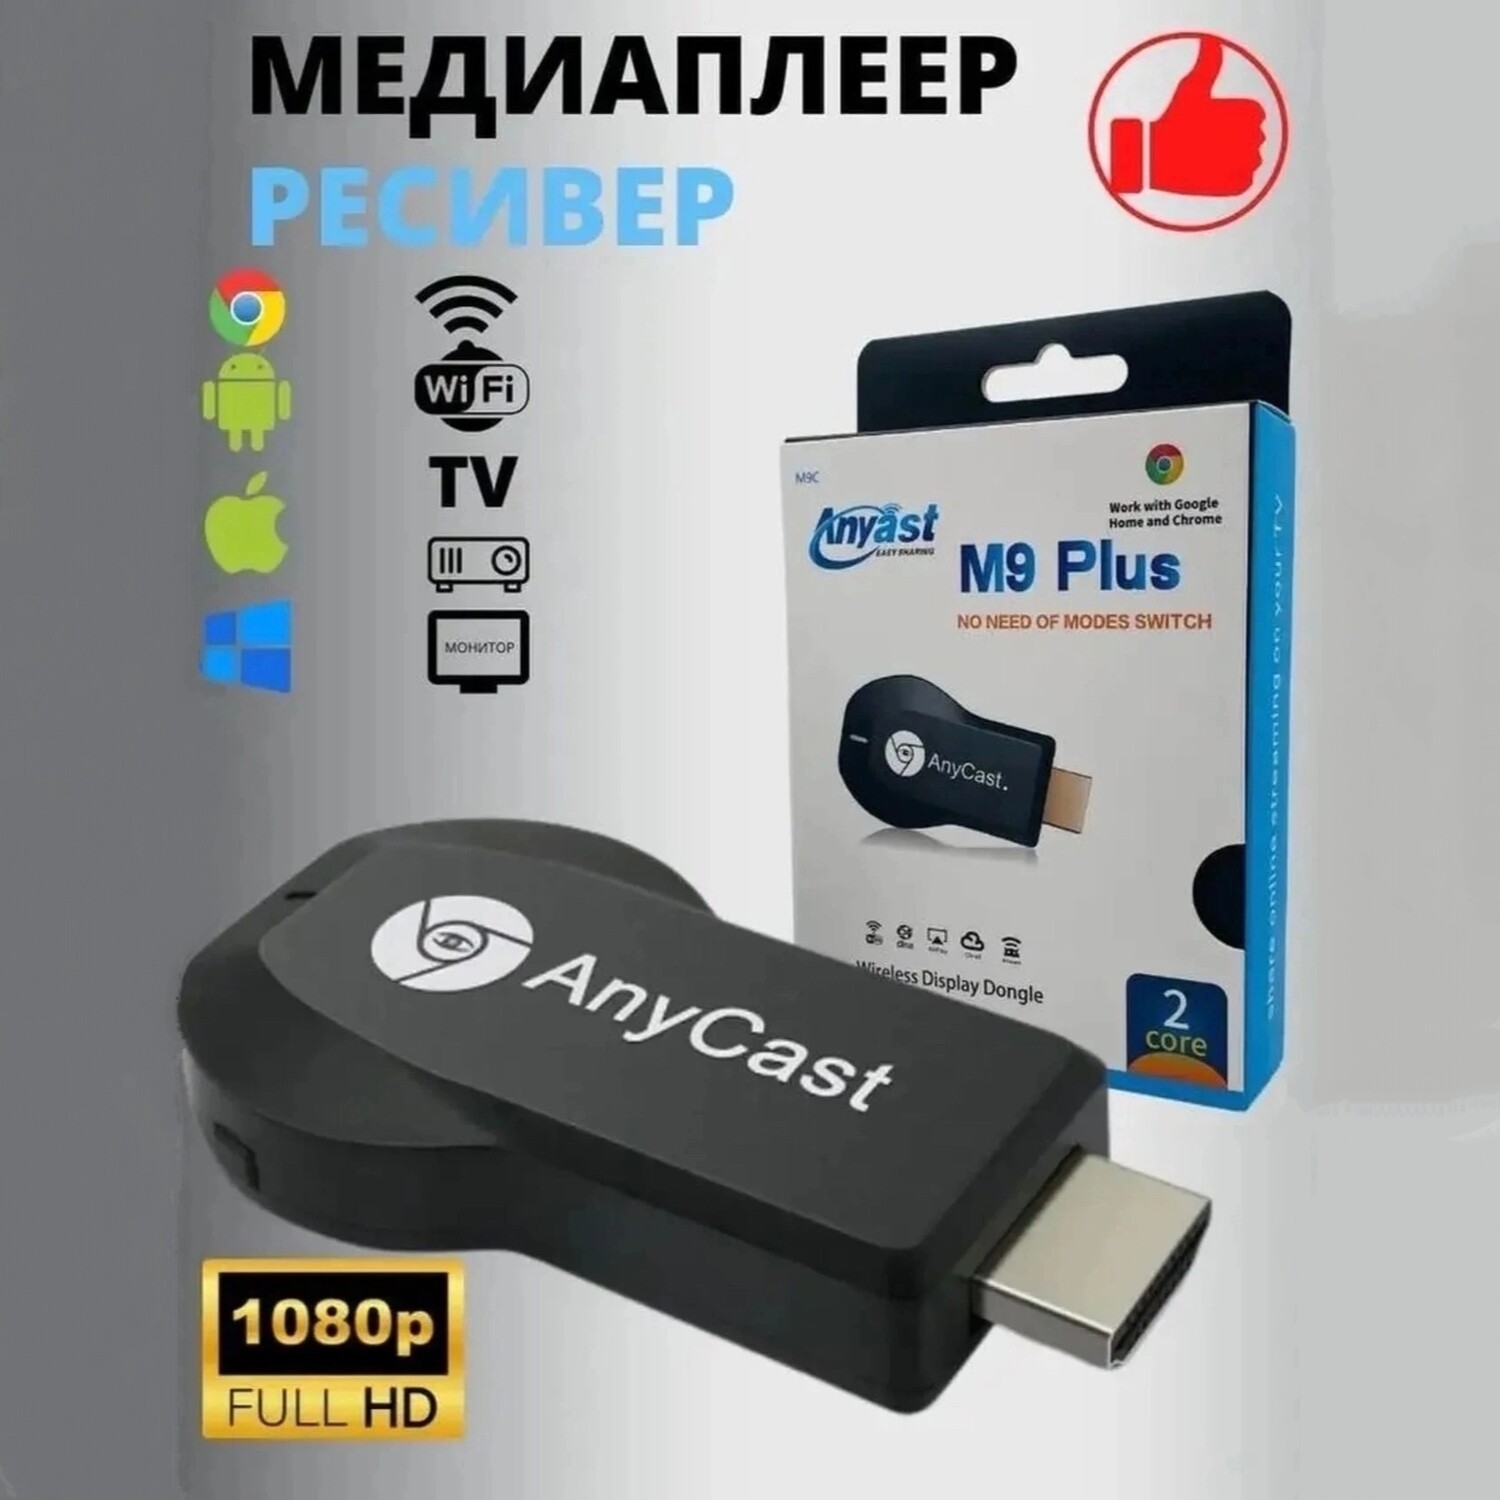 Медиаплеер ресивер, беспроводной ТВ адаптер, "AnyCAST M9 Plus" Display Dongle, WiFi, HDMI, 1080P